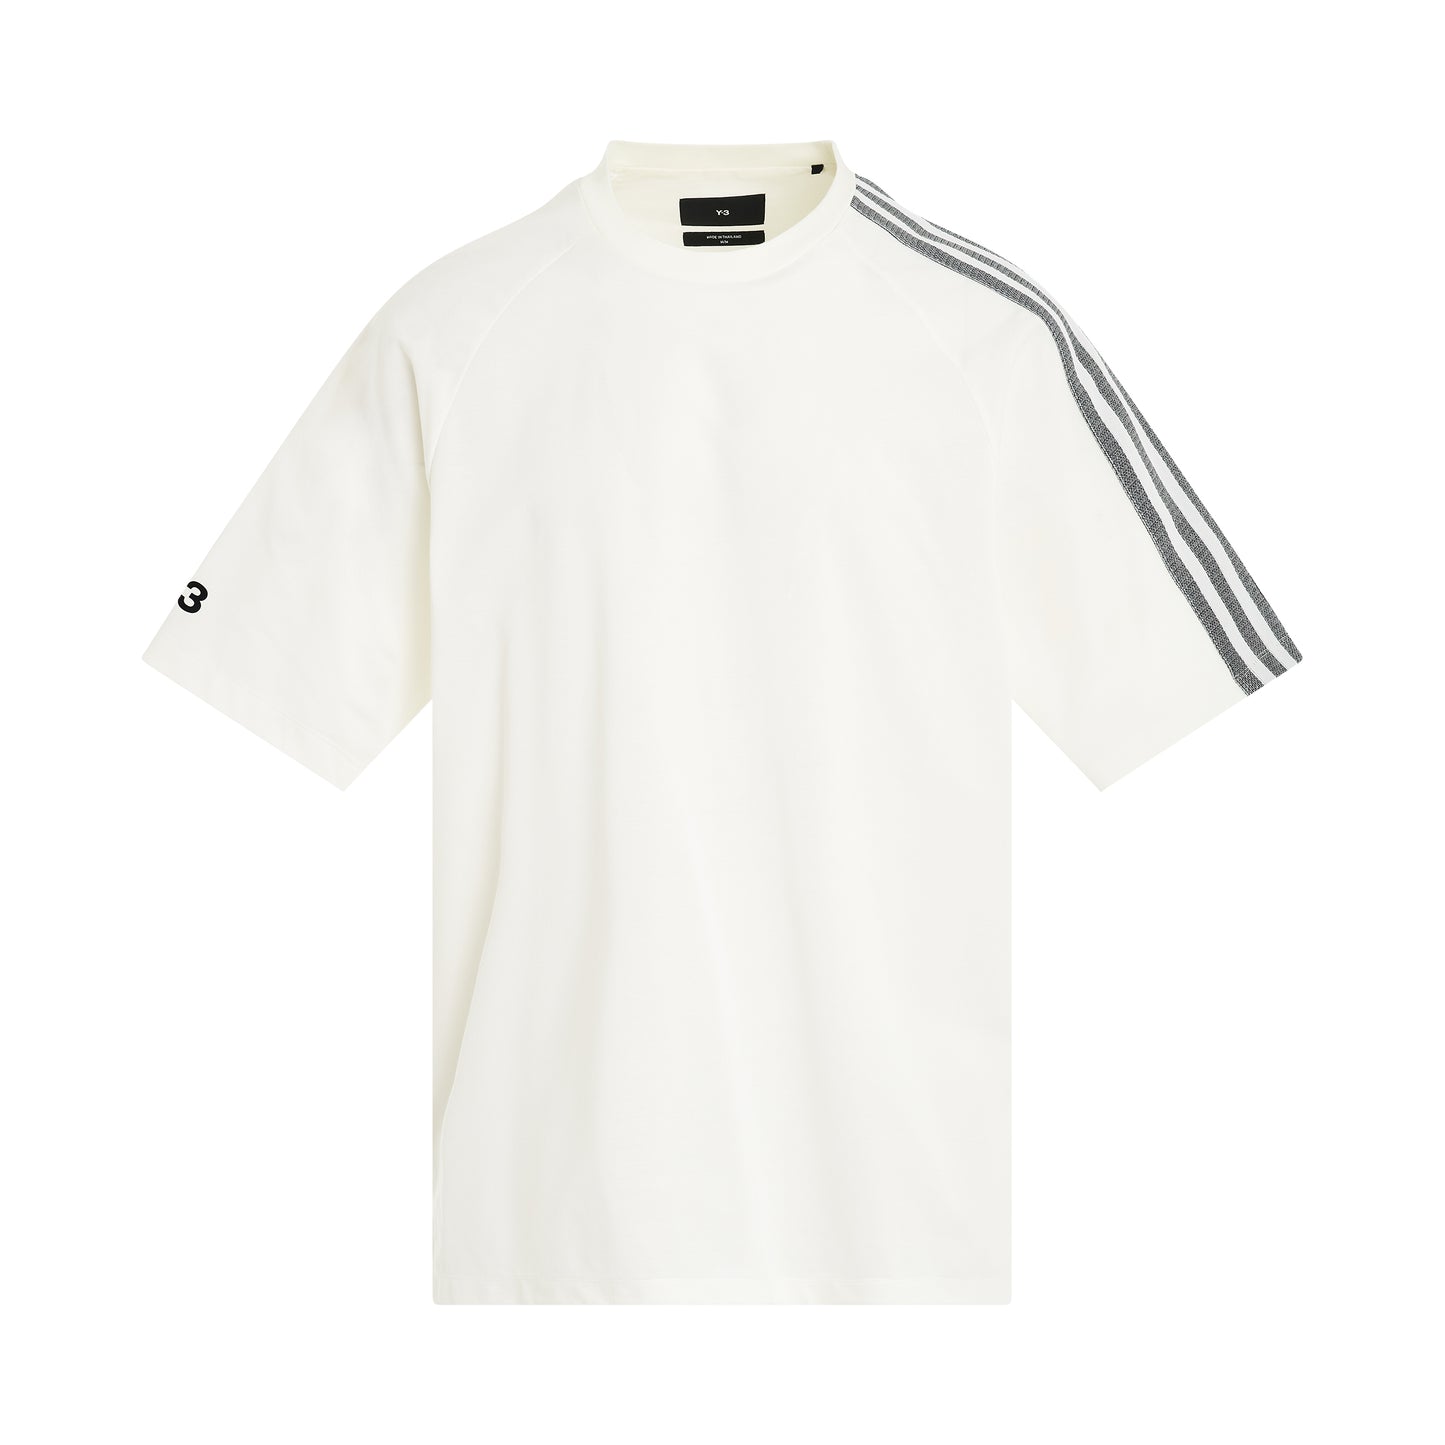 3 Stripe T-Shirt in Off White/Black